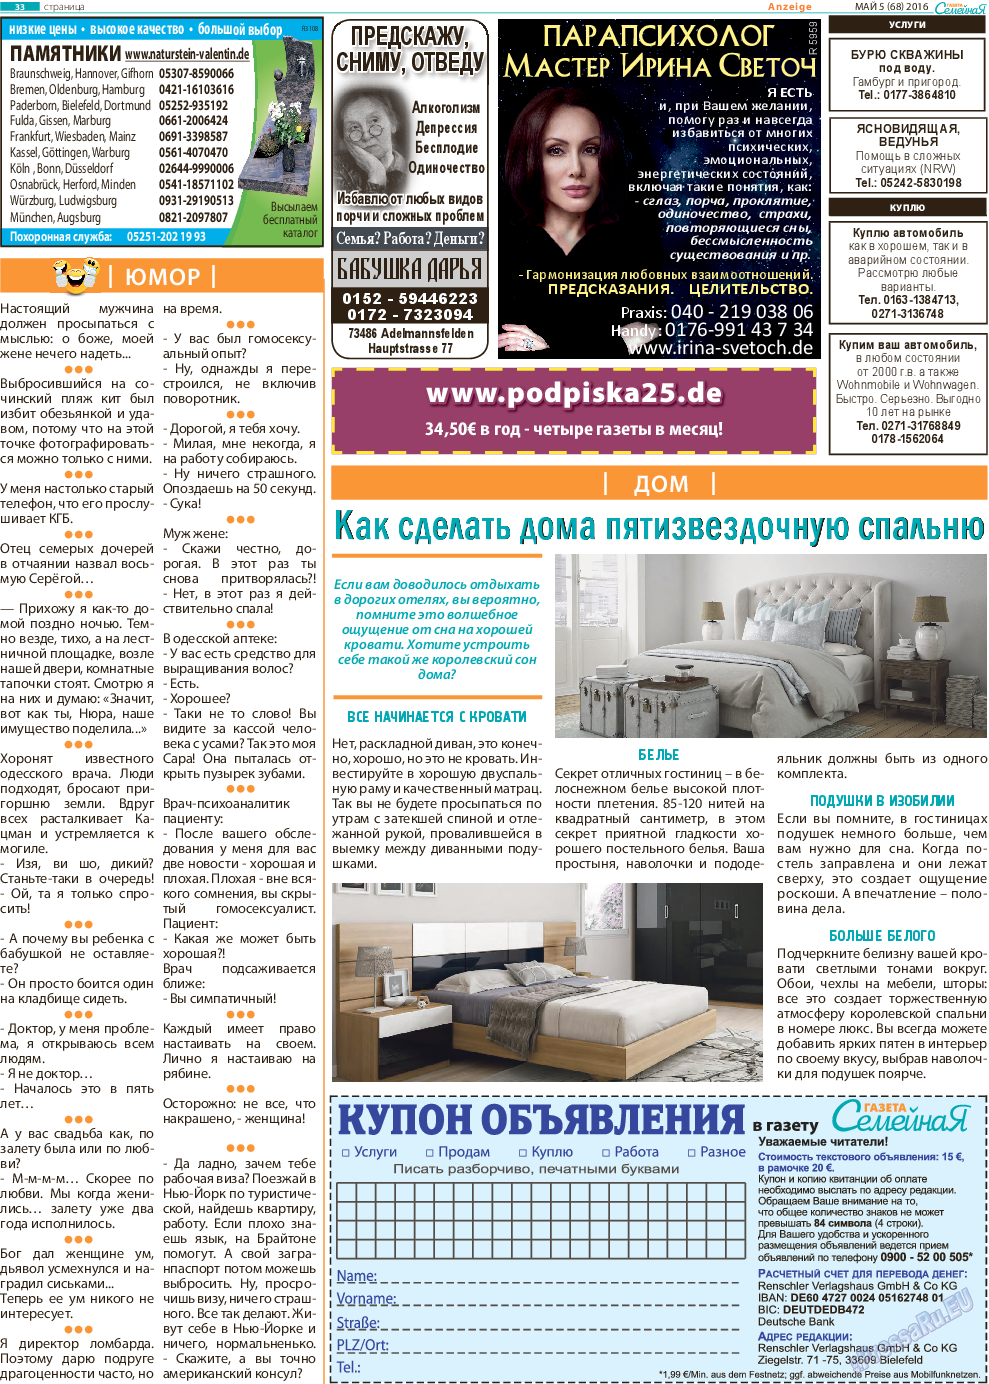 Семейная газета, газета. 2016 №5 стр.33